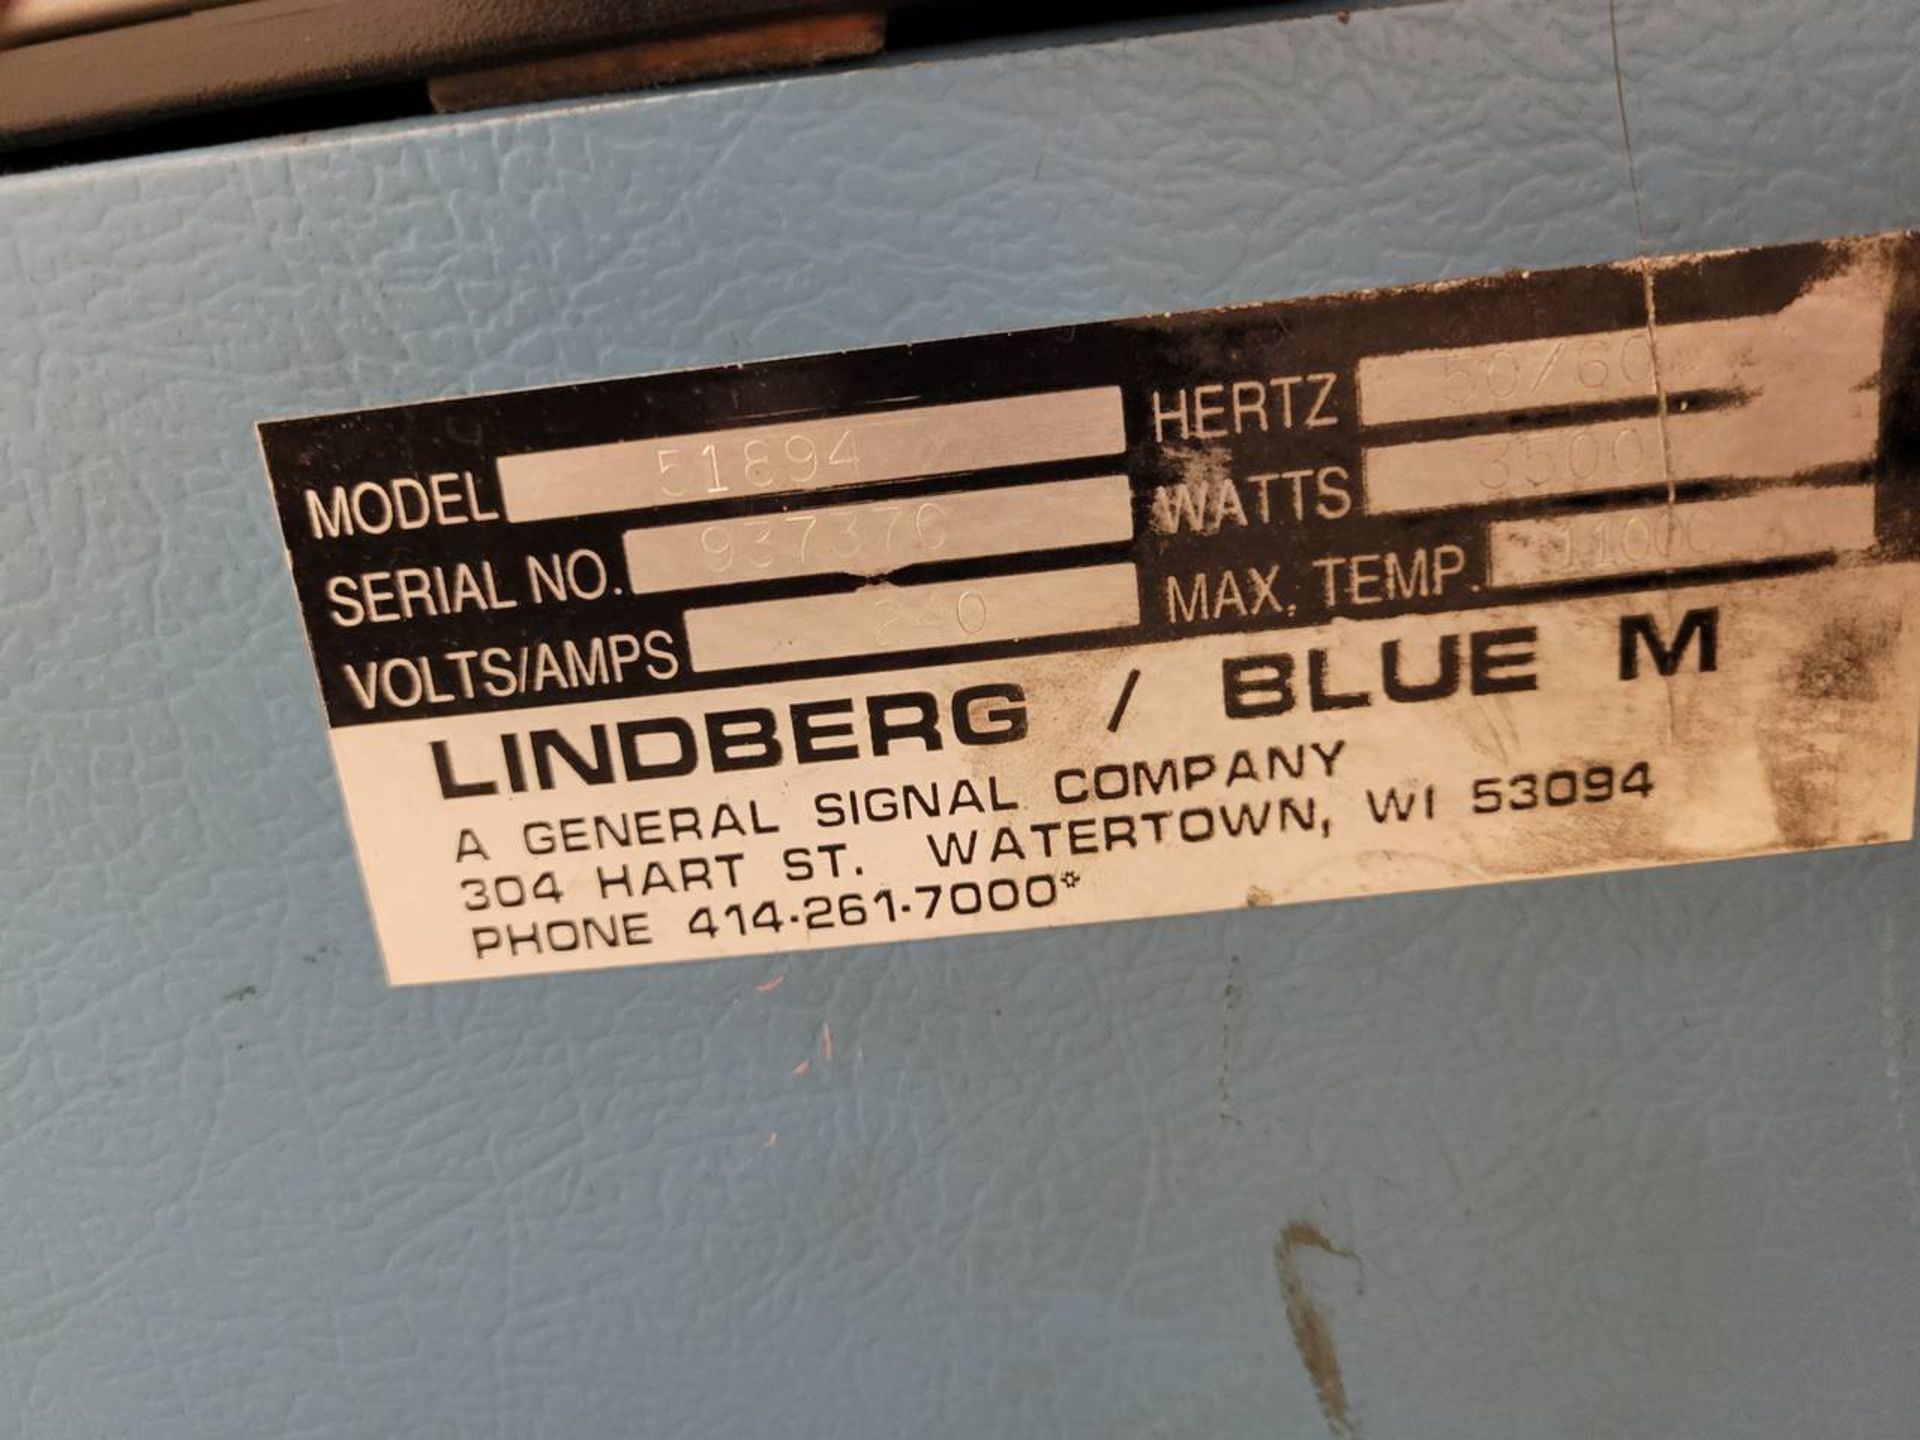 Lindberg / Blue M 894 1100' c electric test oven - Image 5 of 5